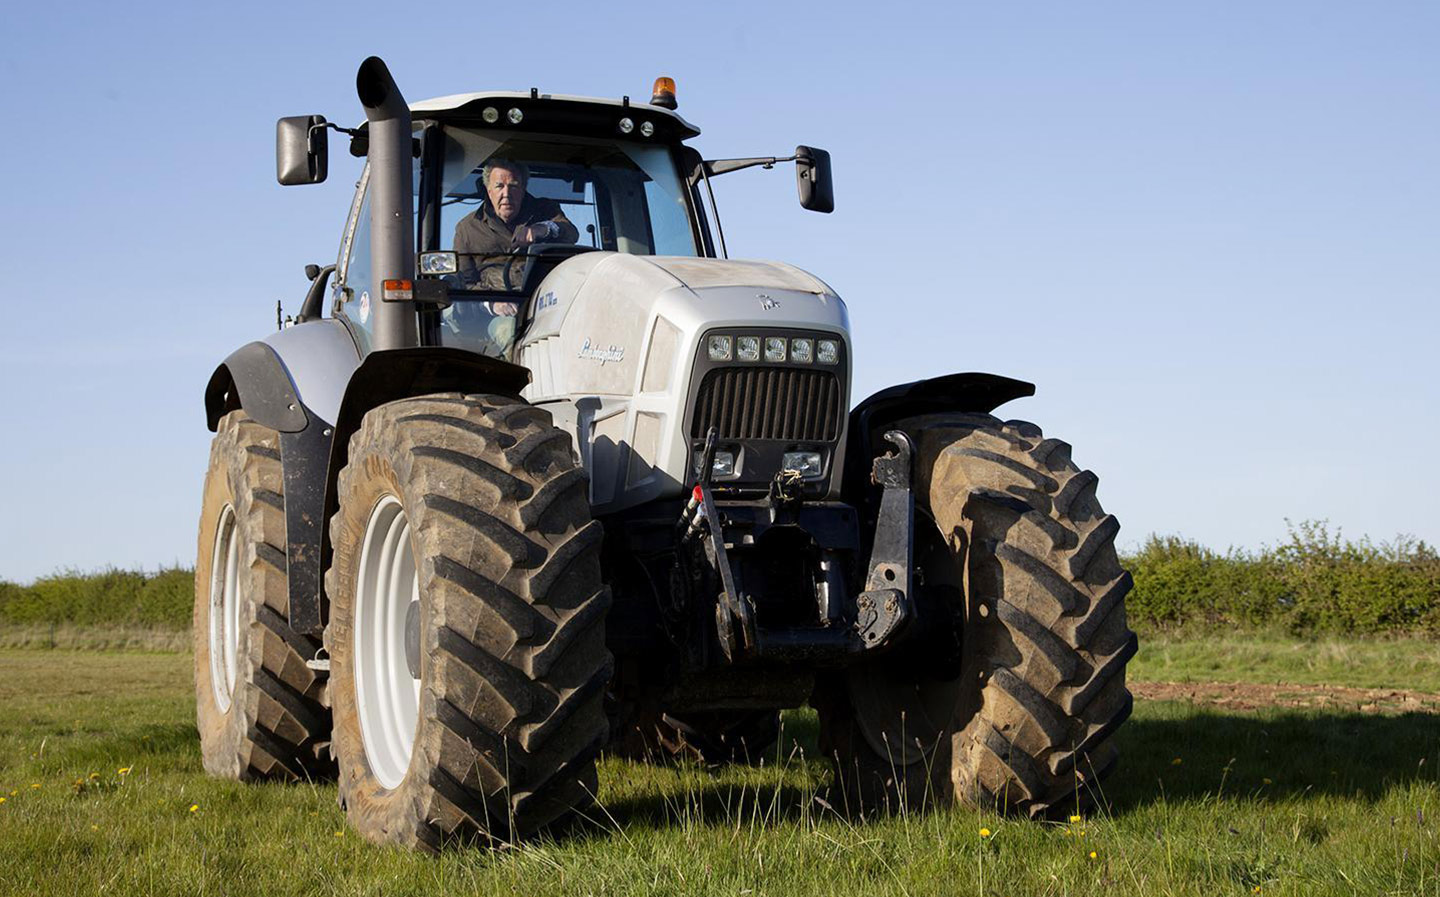 Jeremy Clarkson has bought a new Lamborghini (tractor)